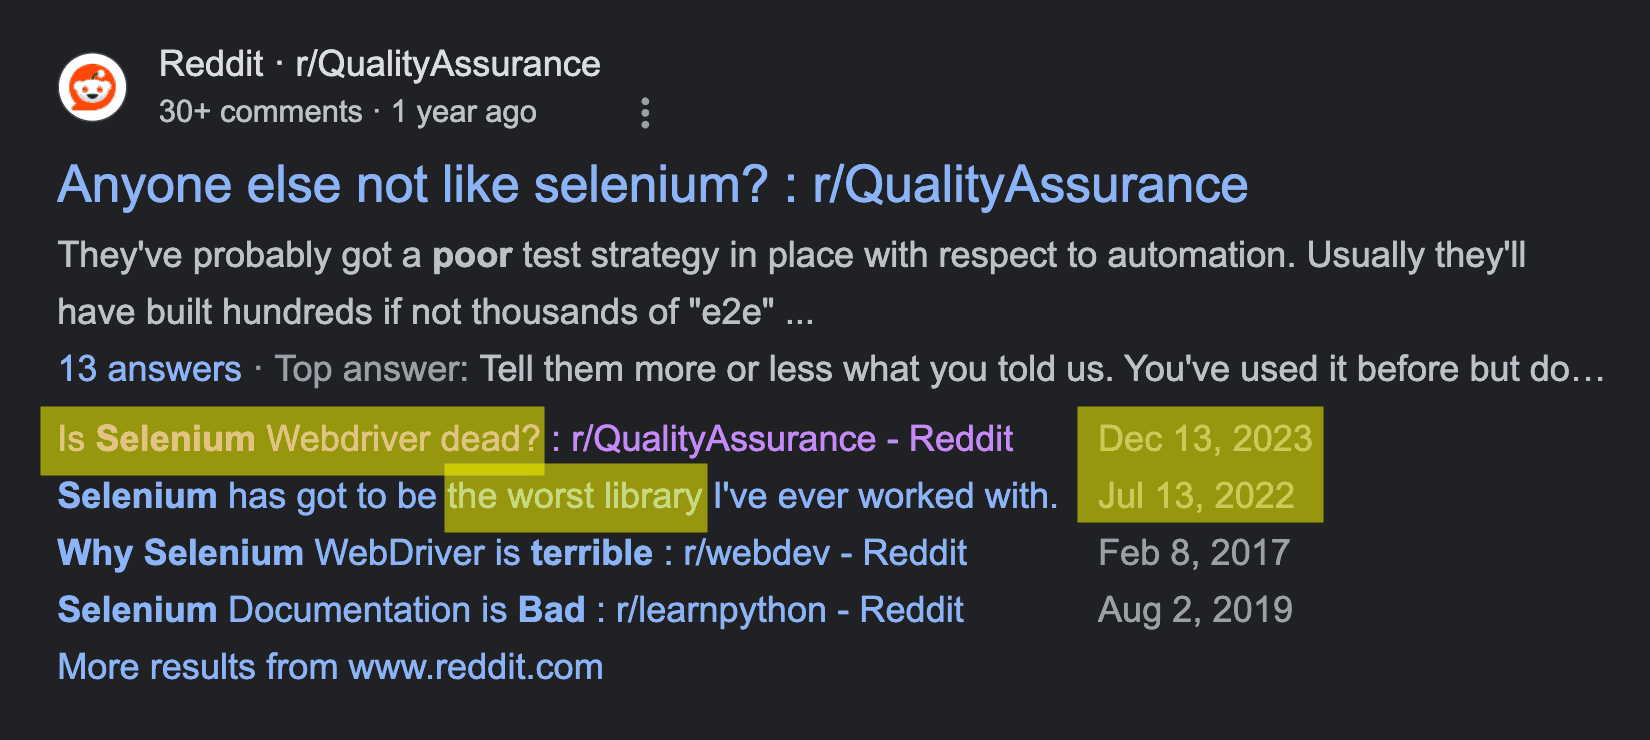 selenium is bad according to reddit - image3.png